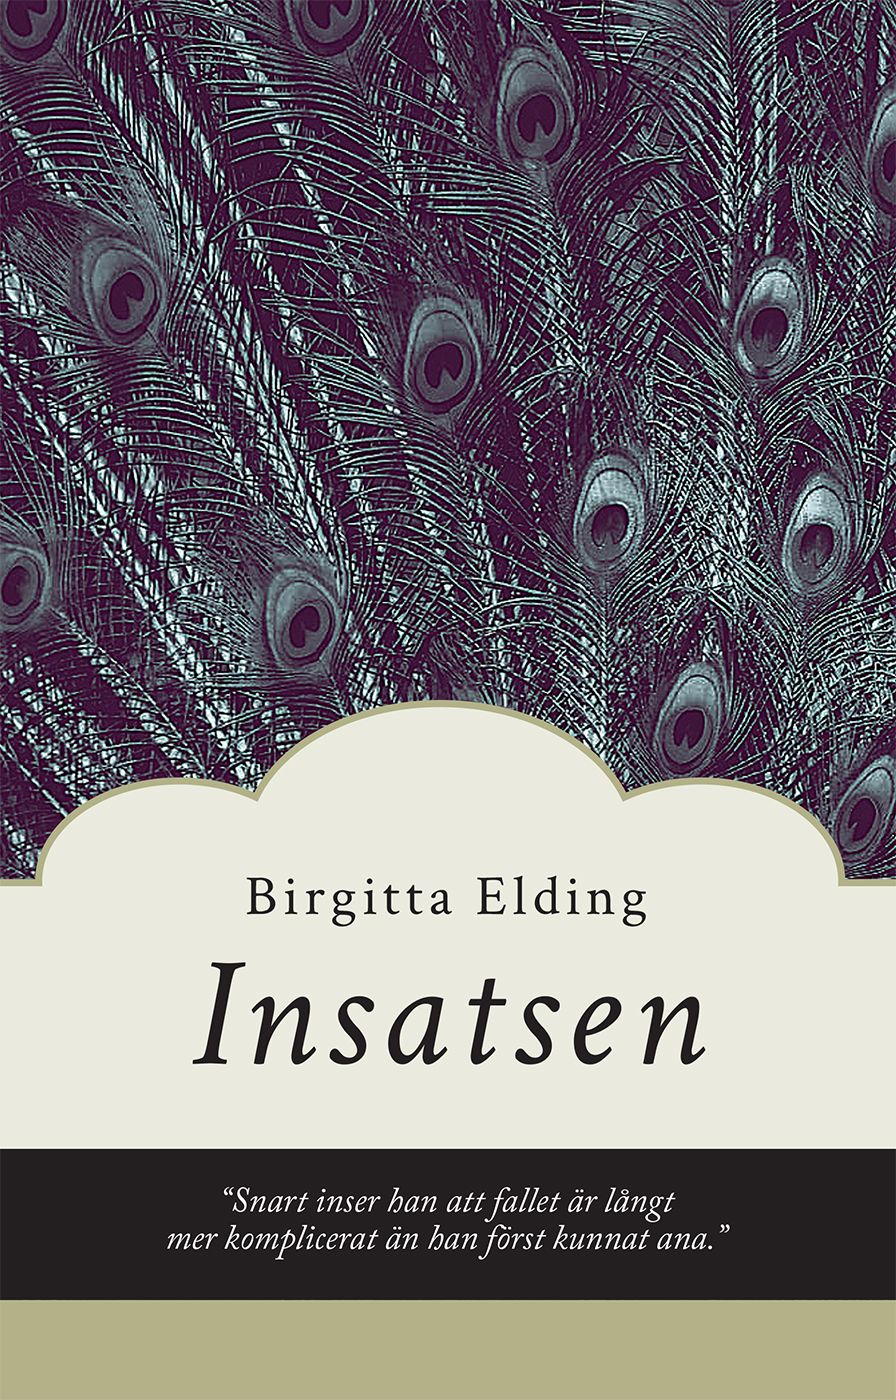 Insatsen, e-bog af Birgitta Elding